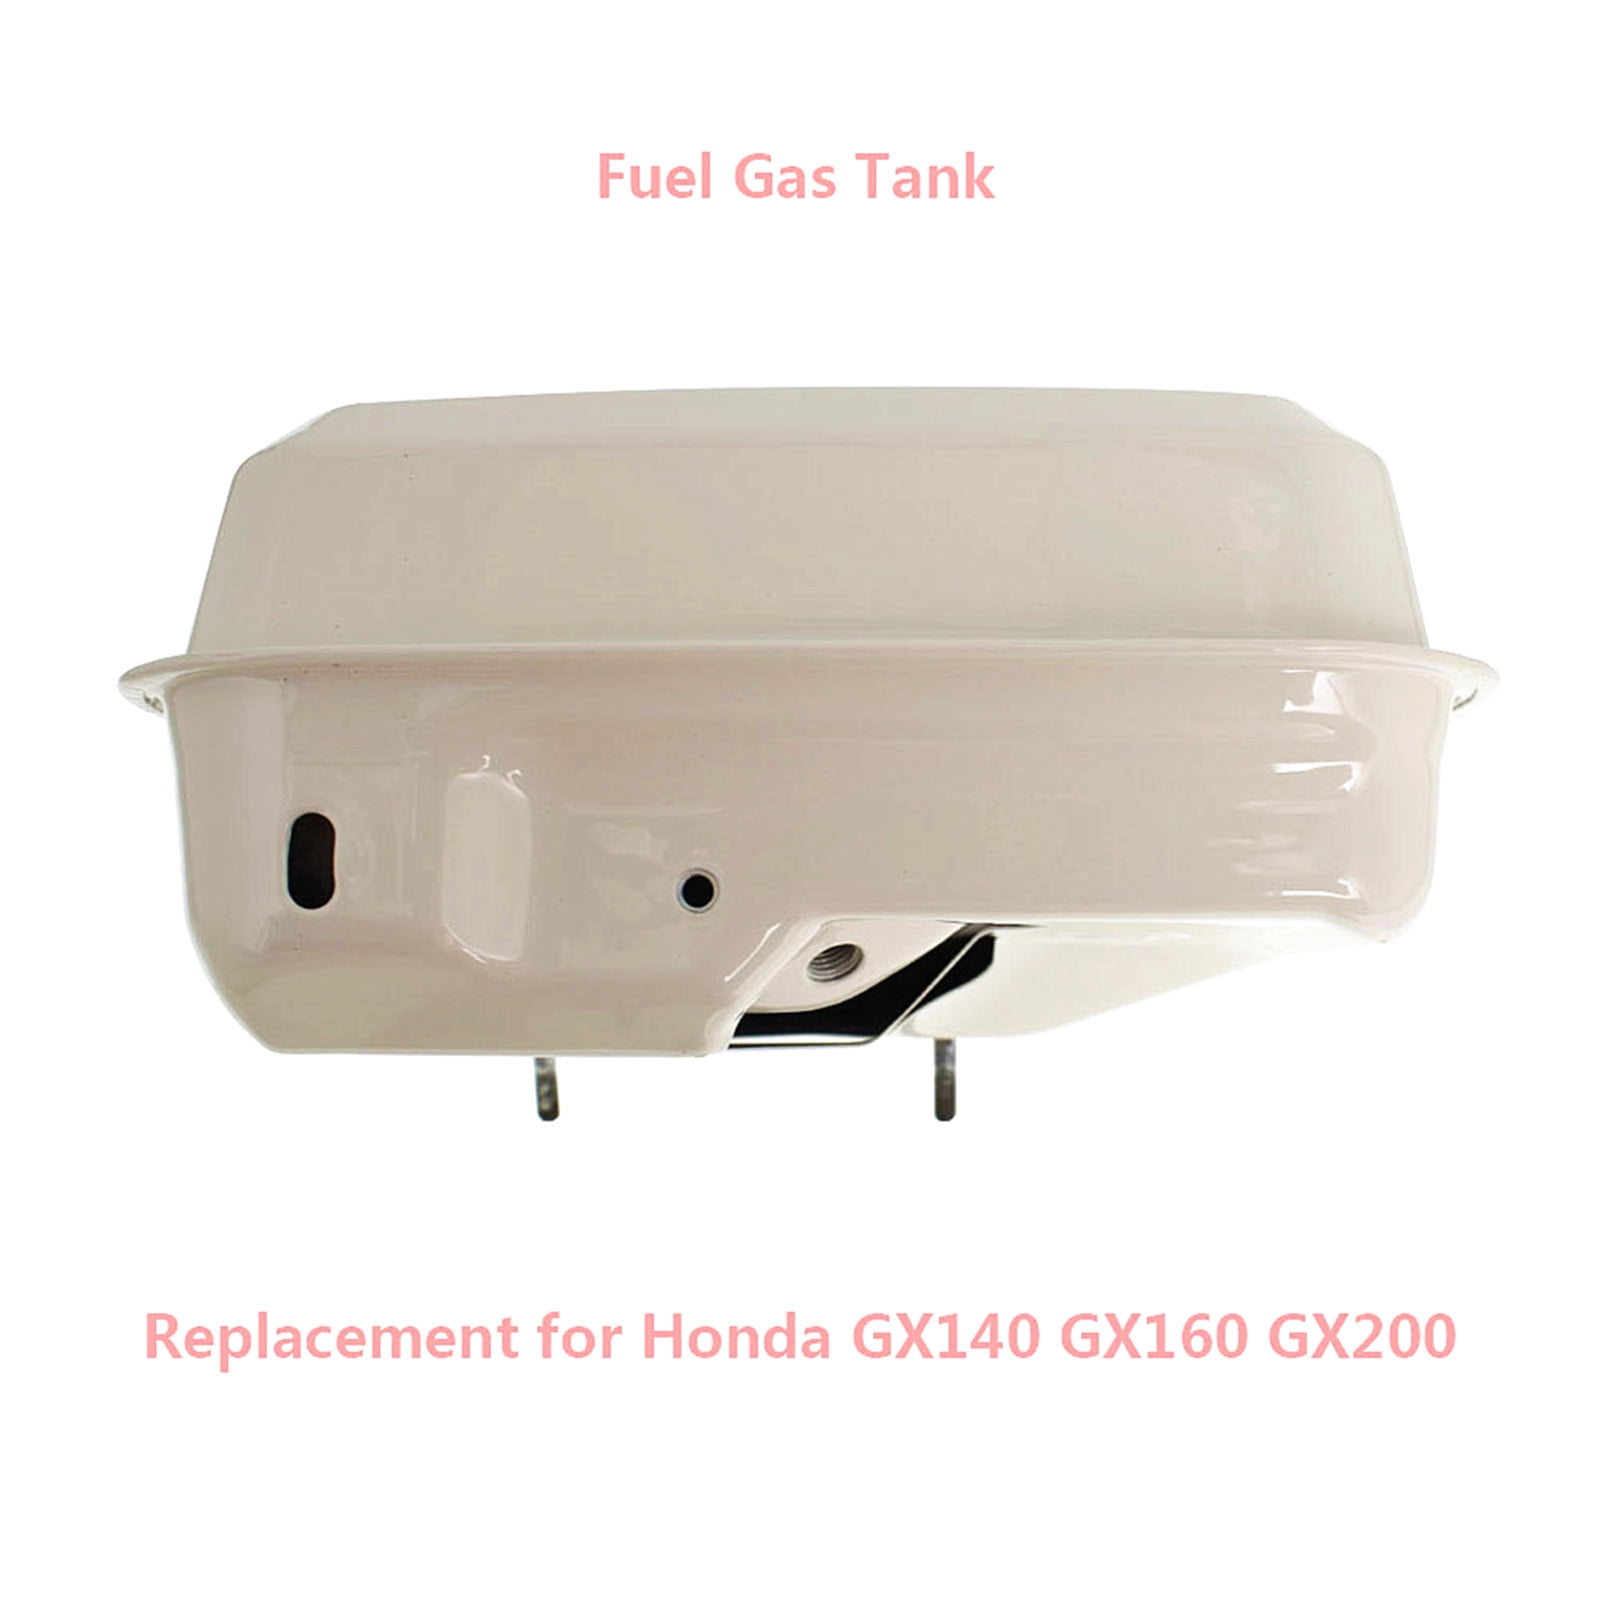 STENS New Fuel Tank for Honda GX140, GX160 and GX200 17510-ZE1-030ZA,  17510-ZE1-020ZA 125-560 - The Home Depot